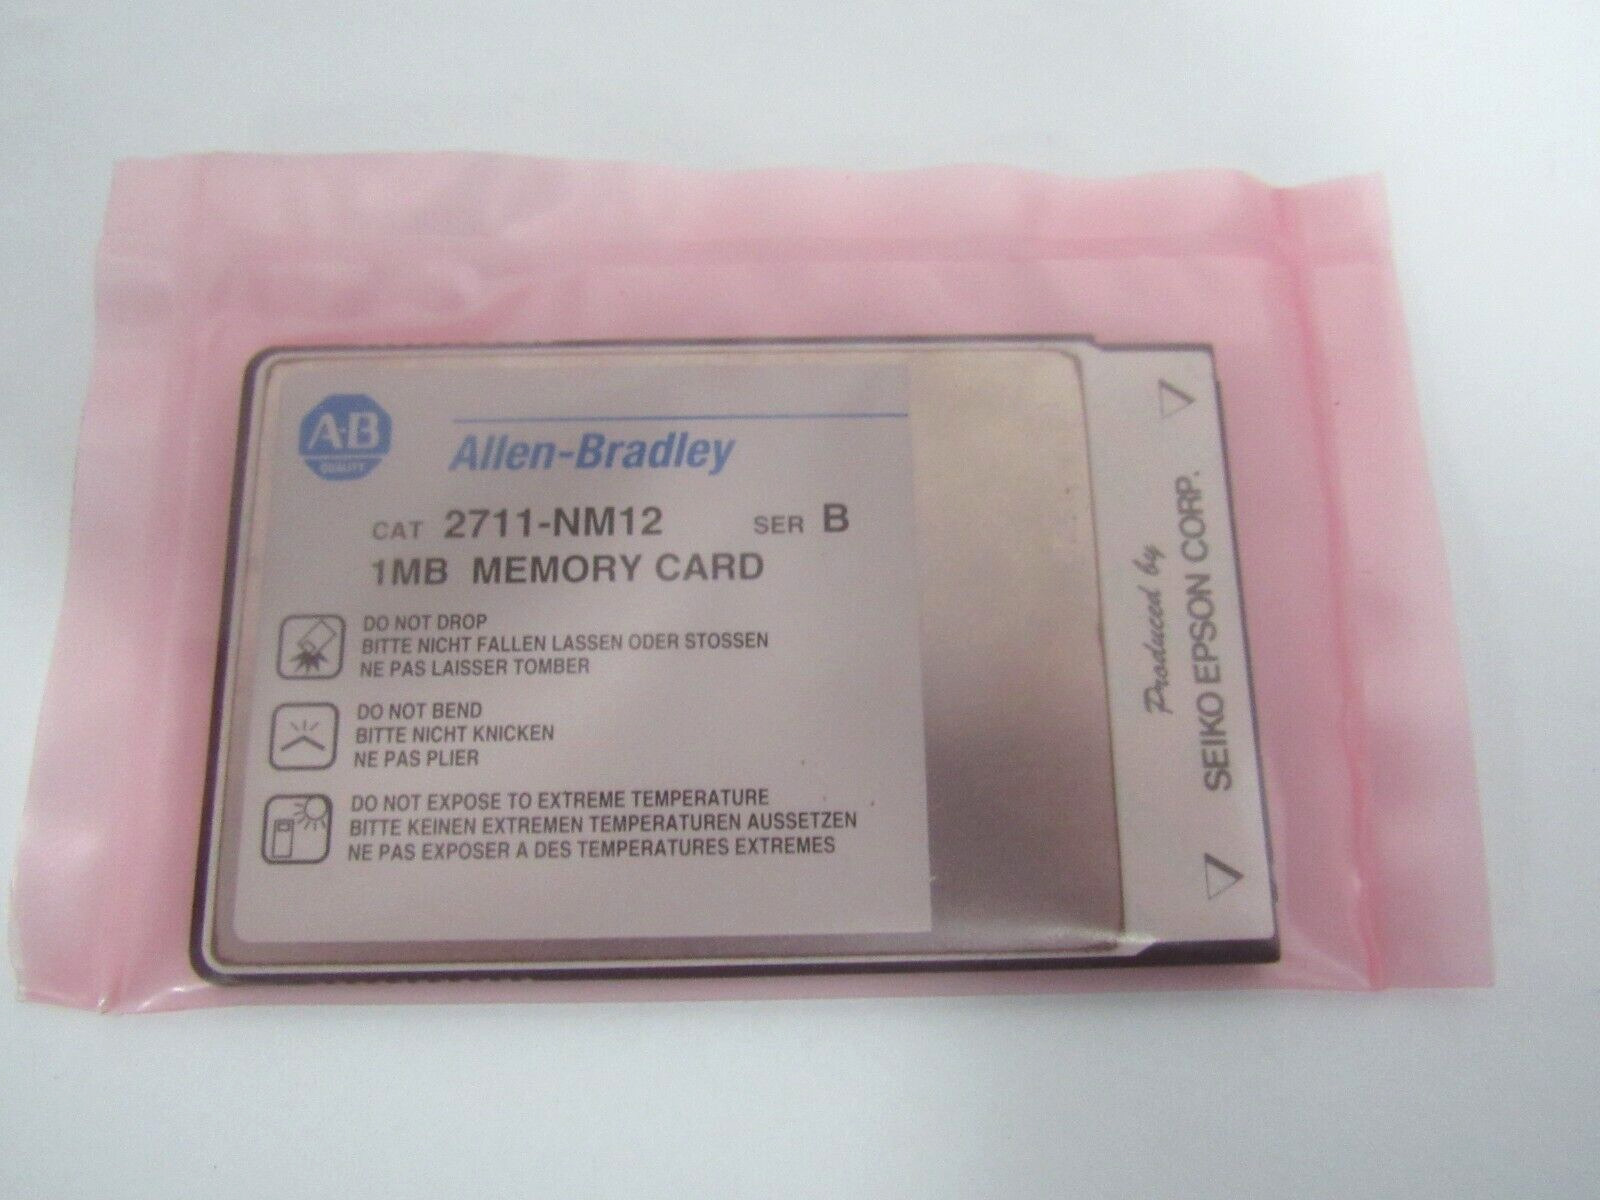 ALLEN BRADLEY 2711-NM12 SER B 1MB MEMORY CARD